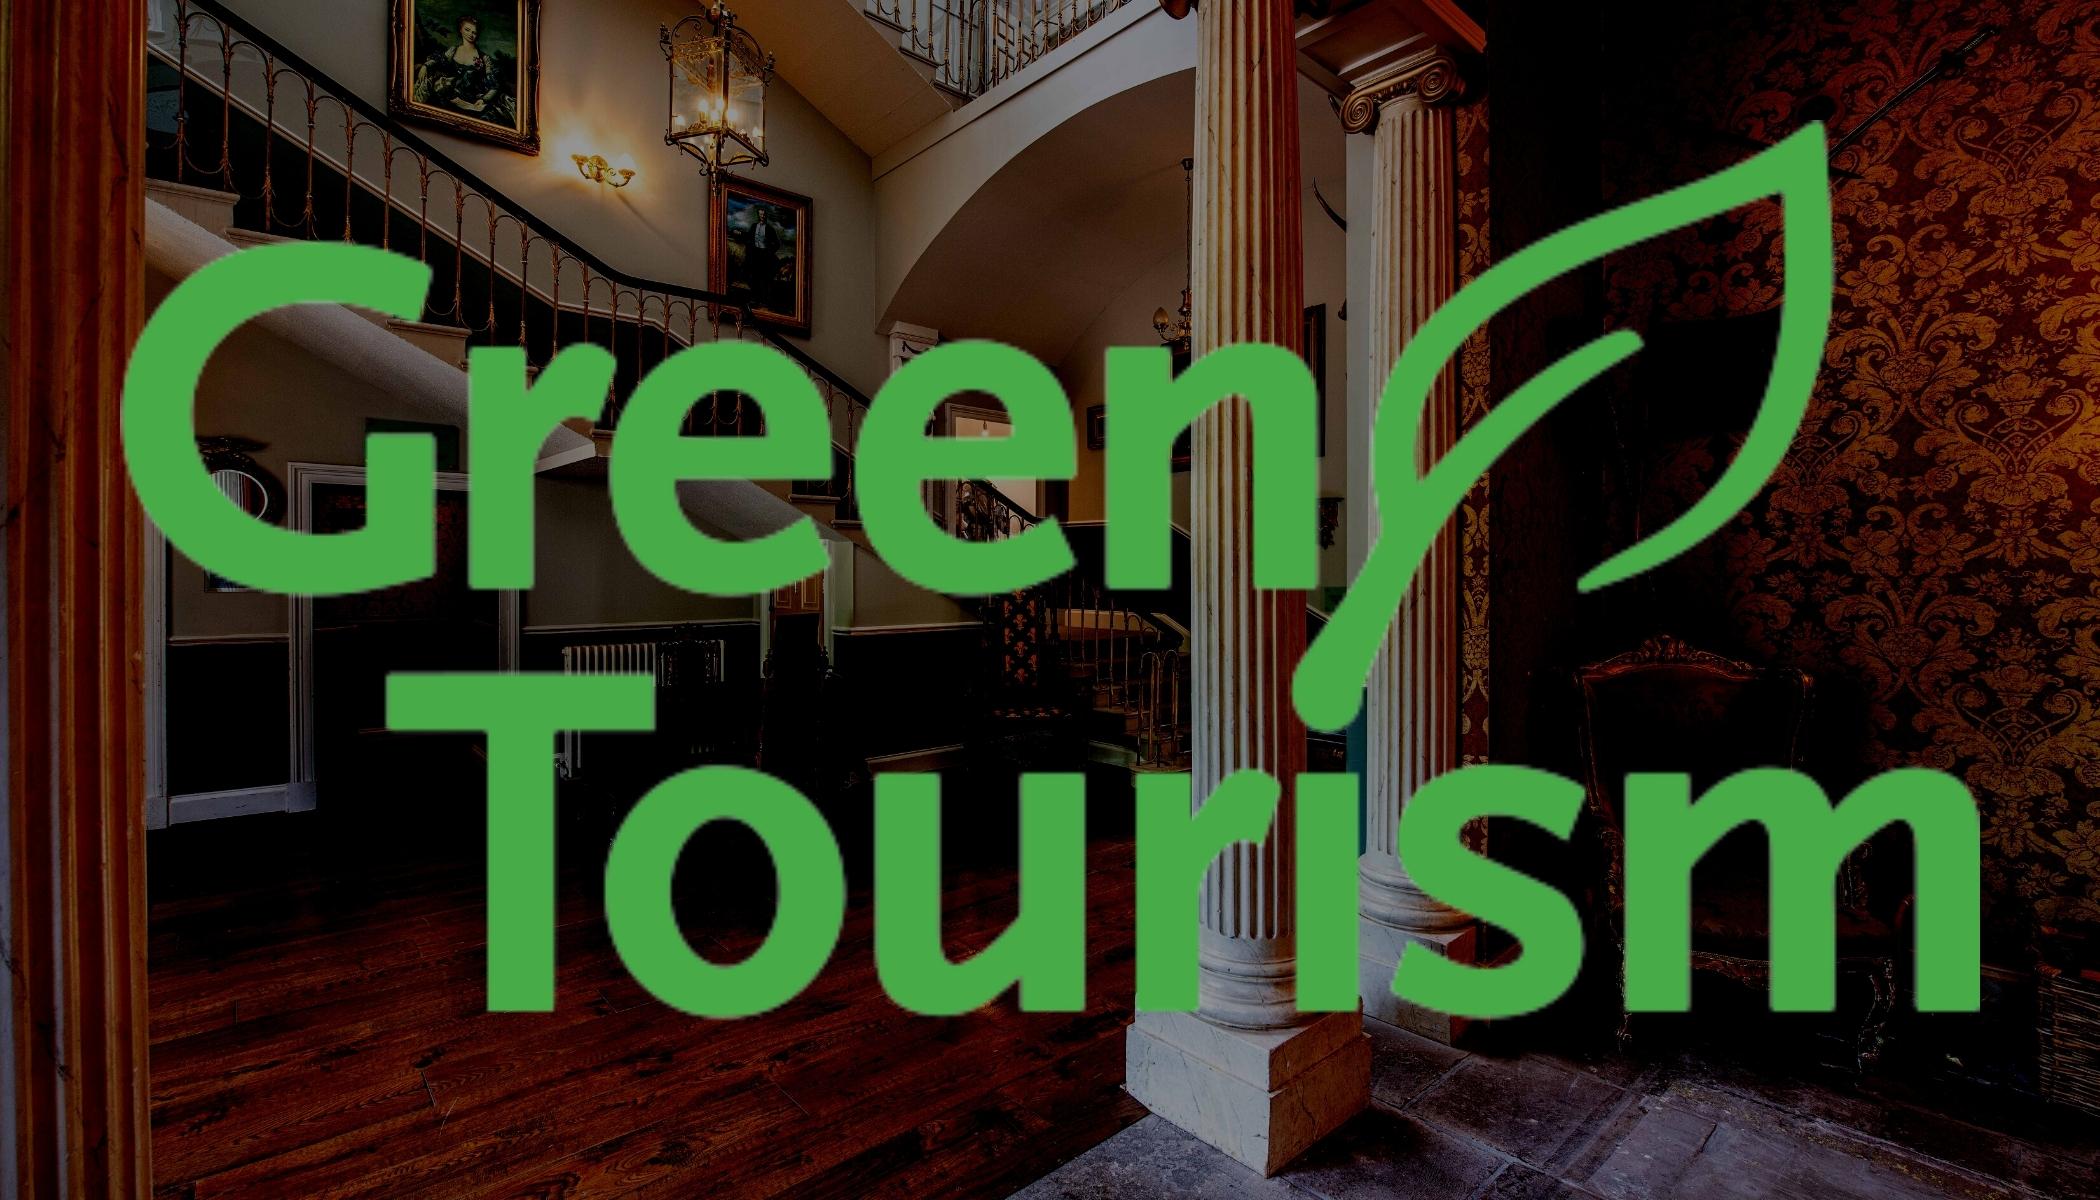  Green Tourism